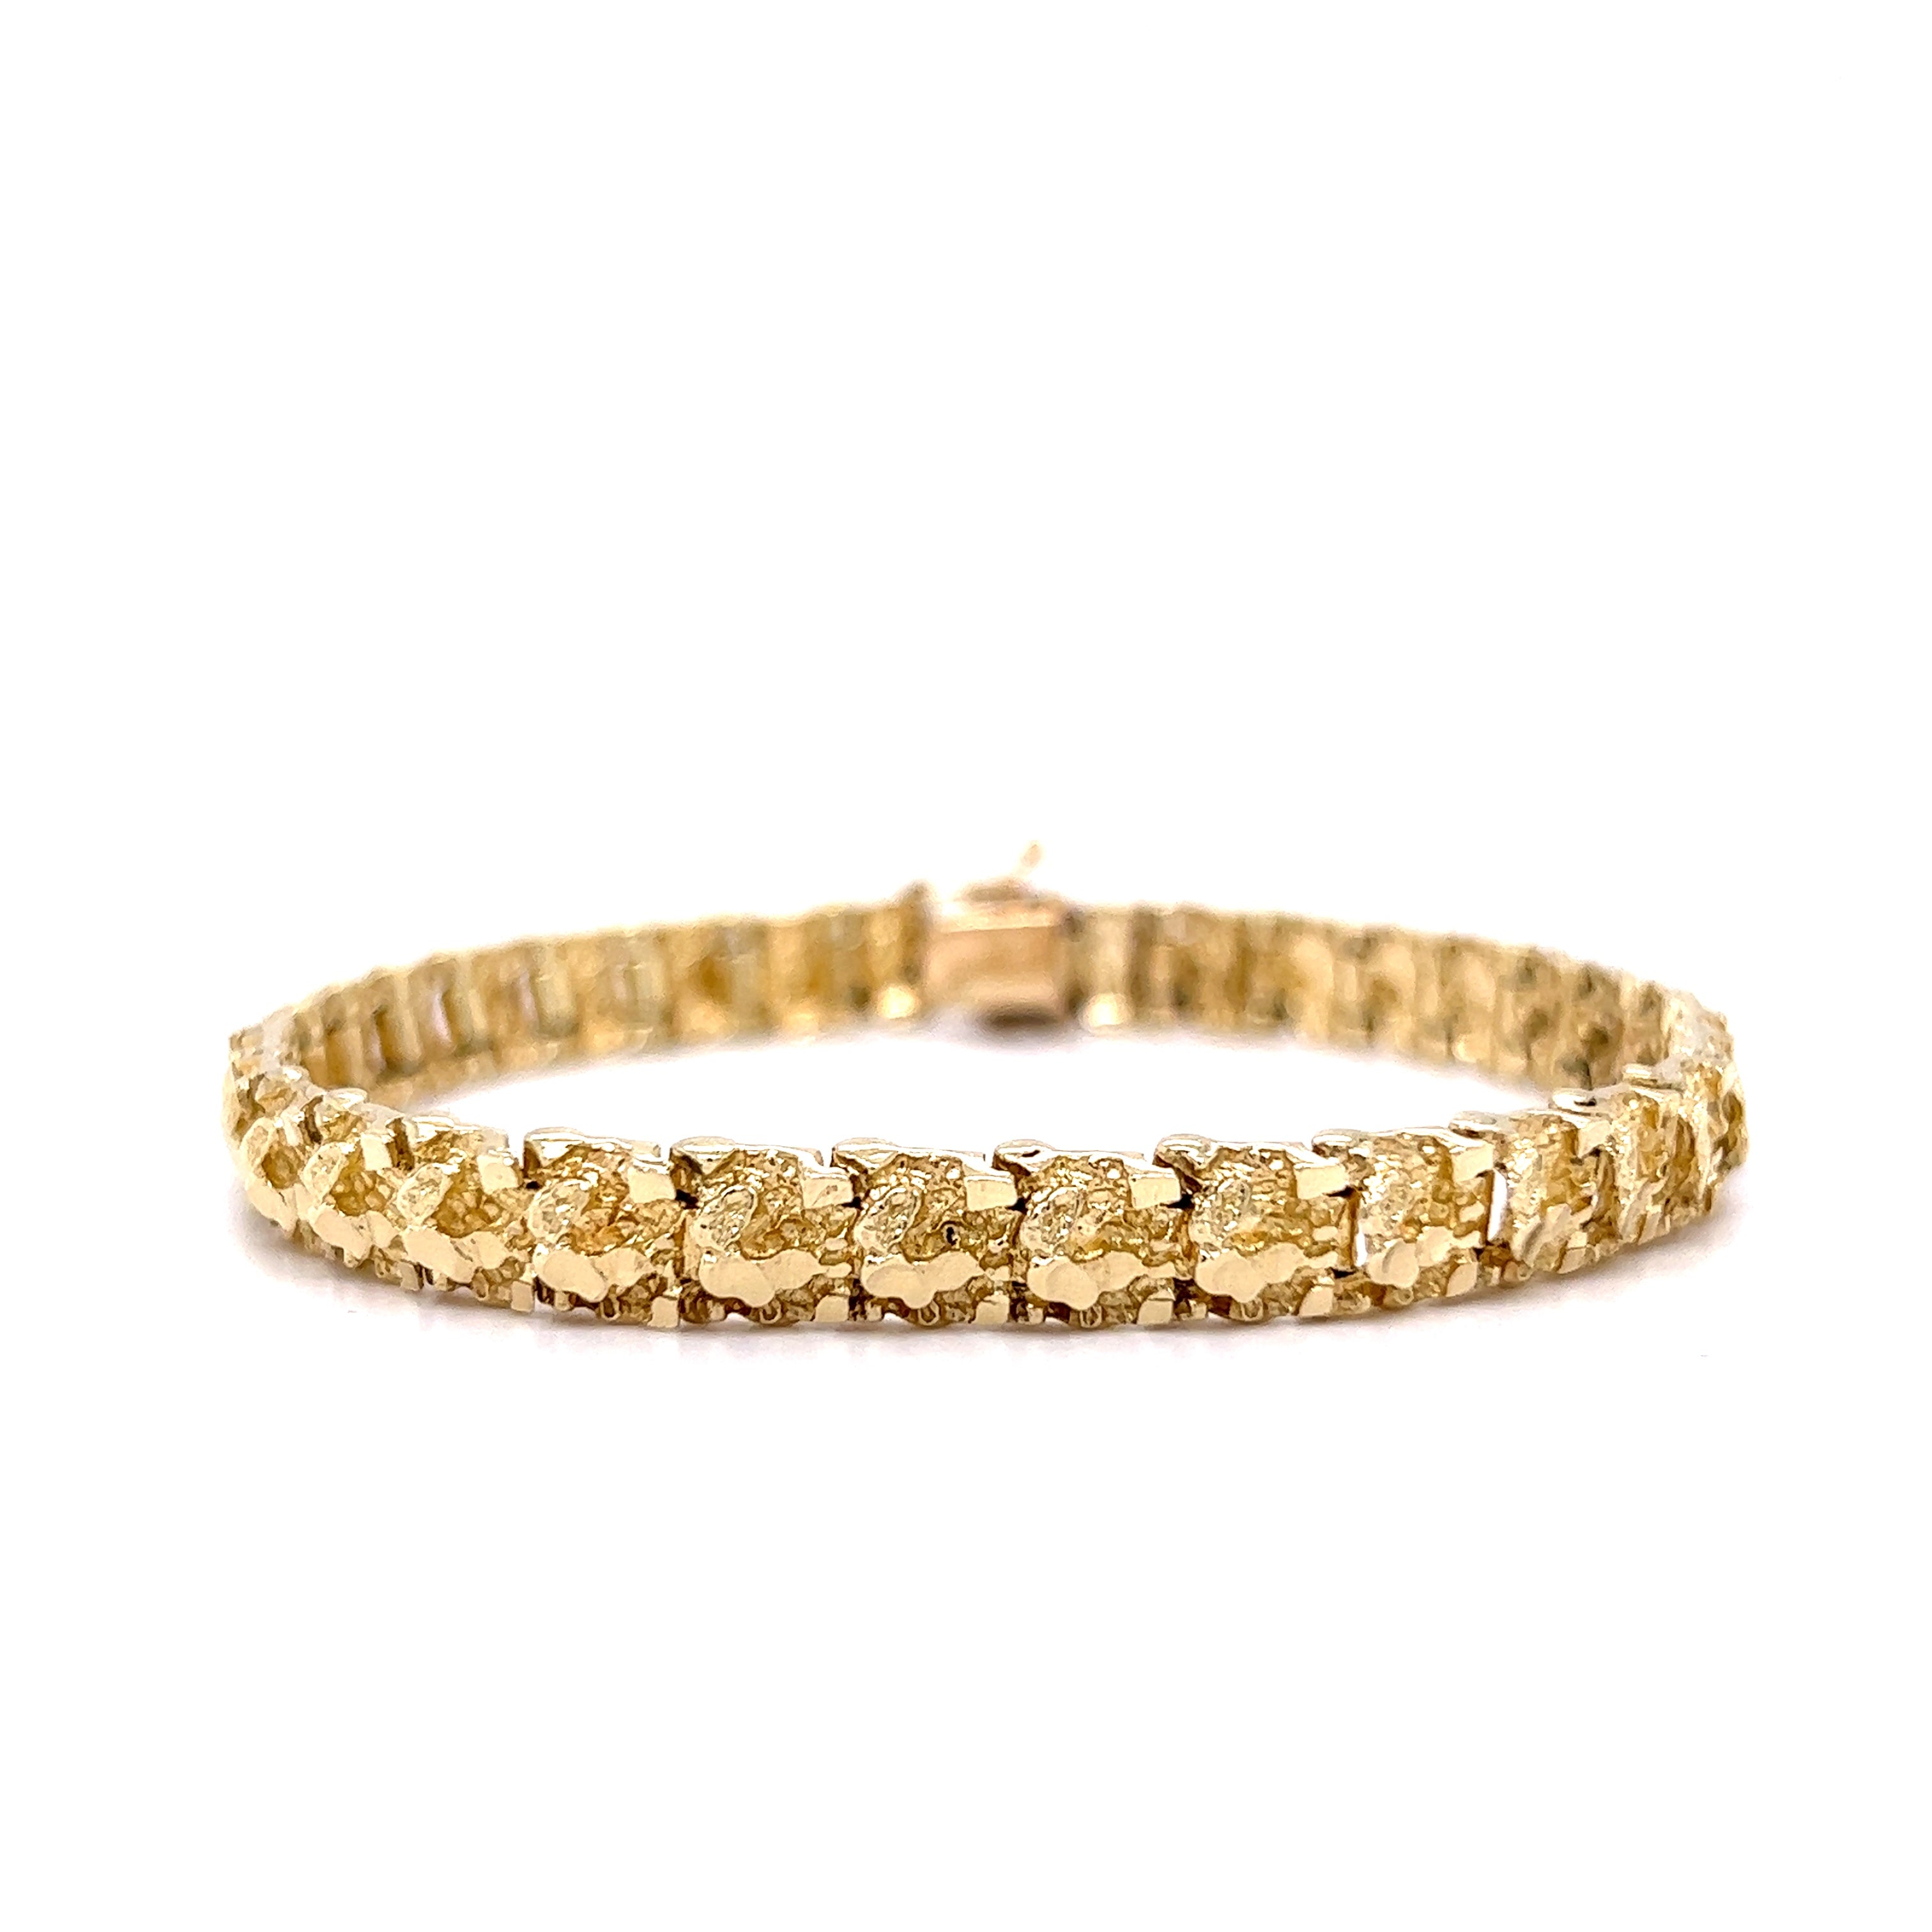 Men's 5.5mm Wide Gold Nugget Link Bracelet - Alaska Jewelry